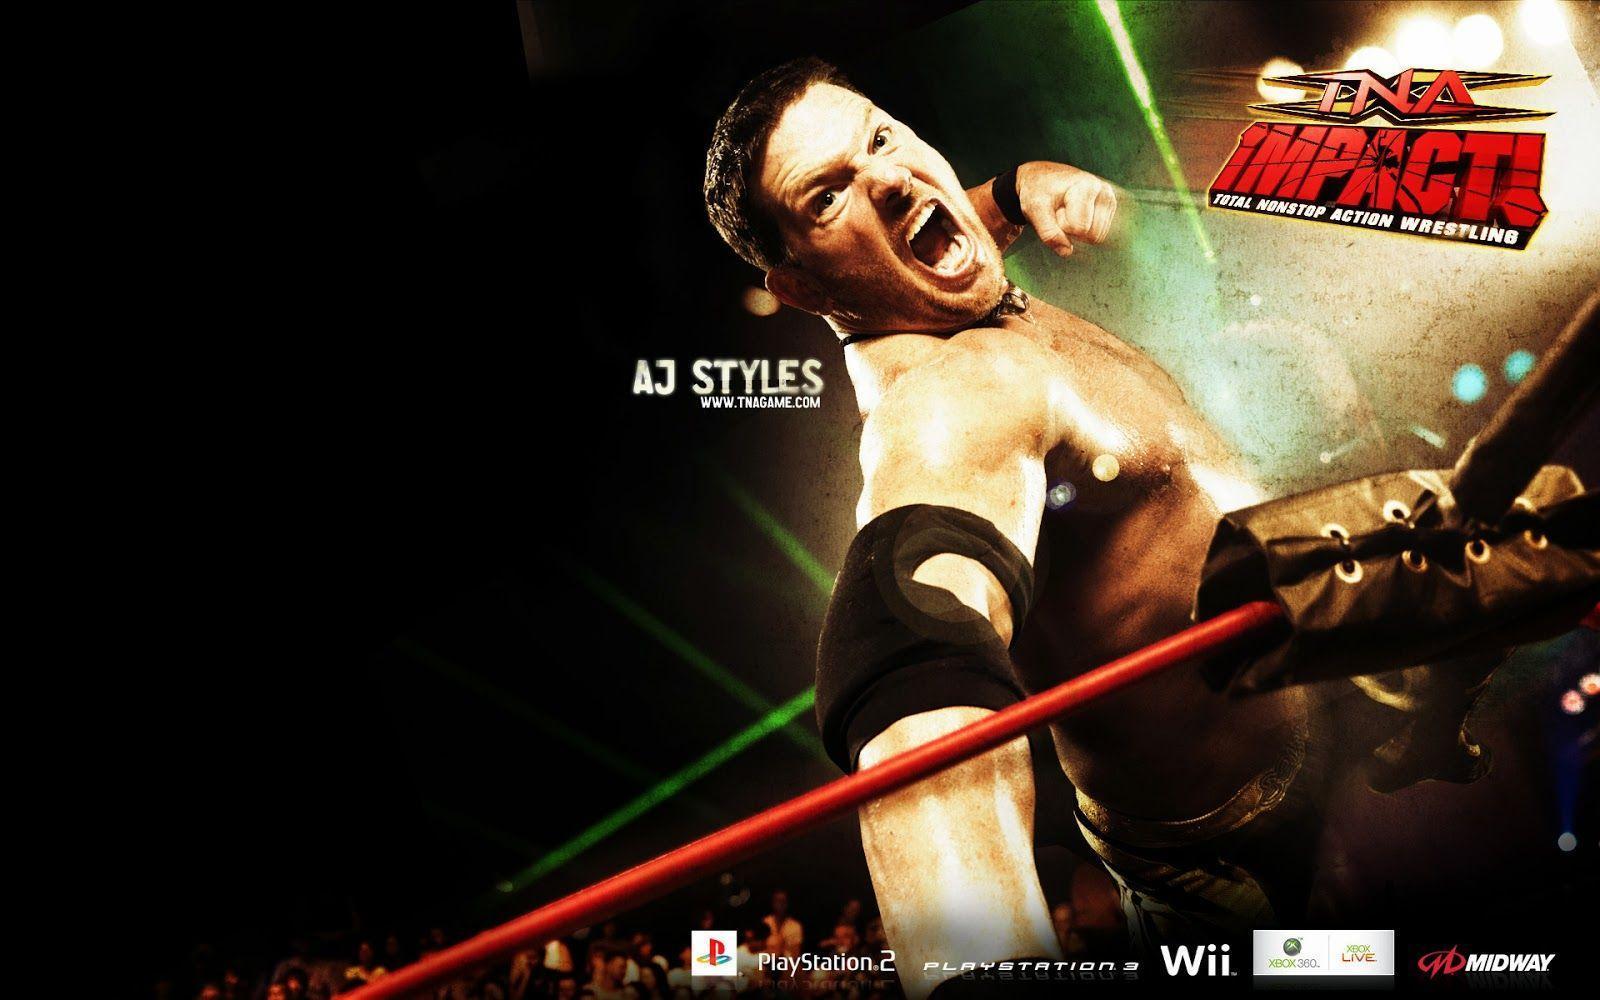 All new wallpaper, A.J. Styles WWE Wallpaper HD